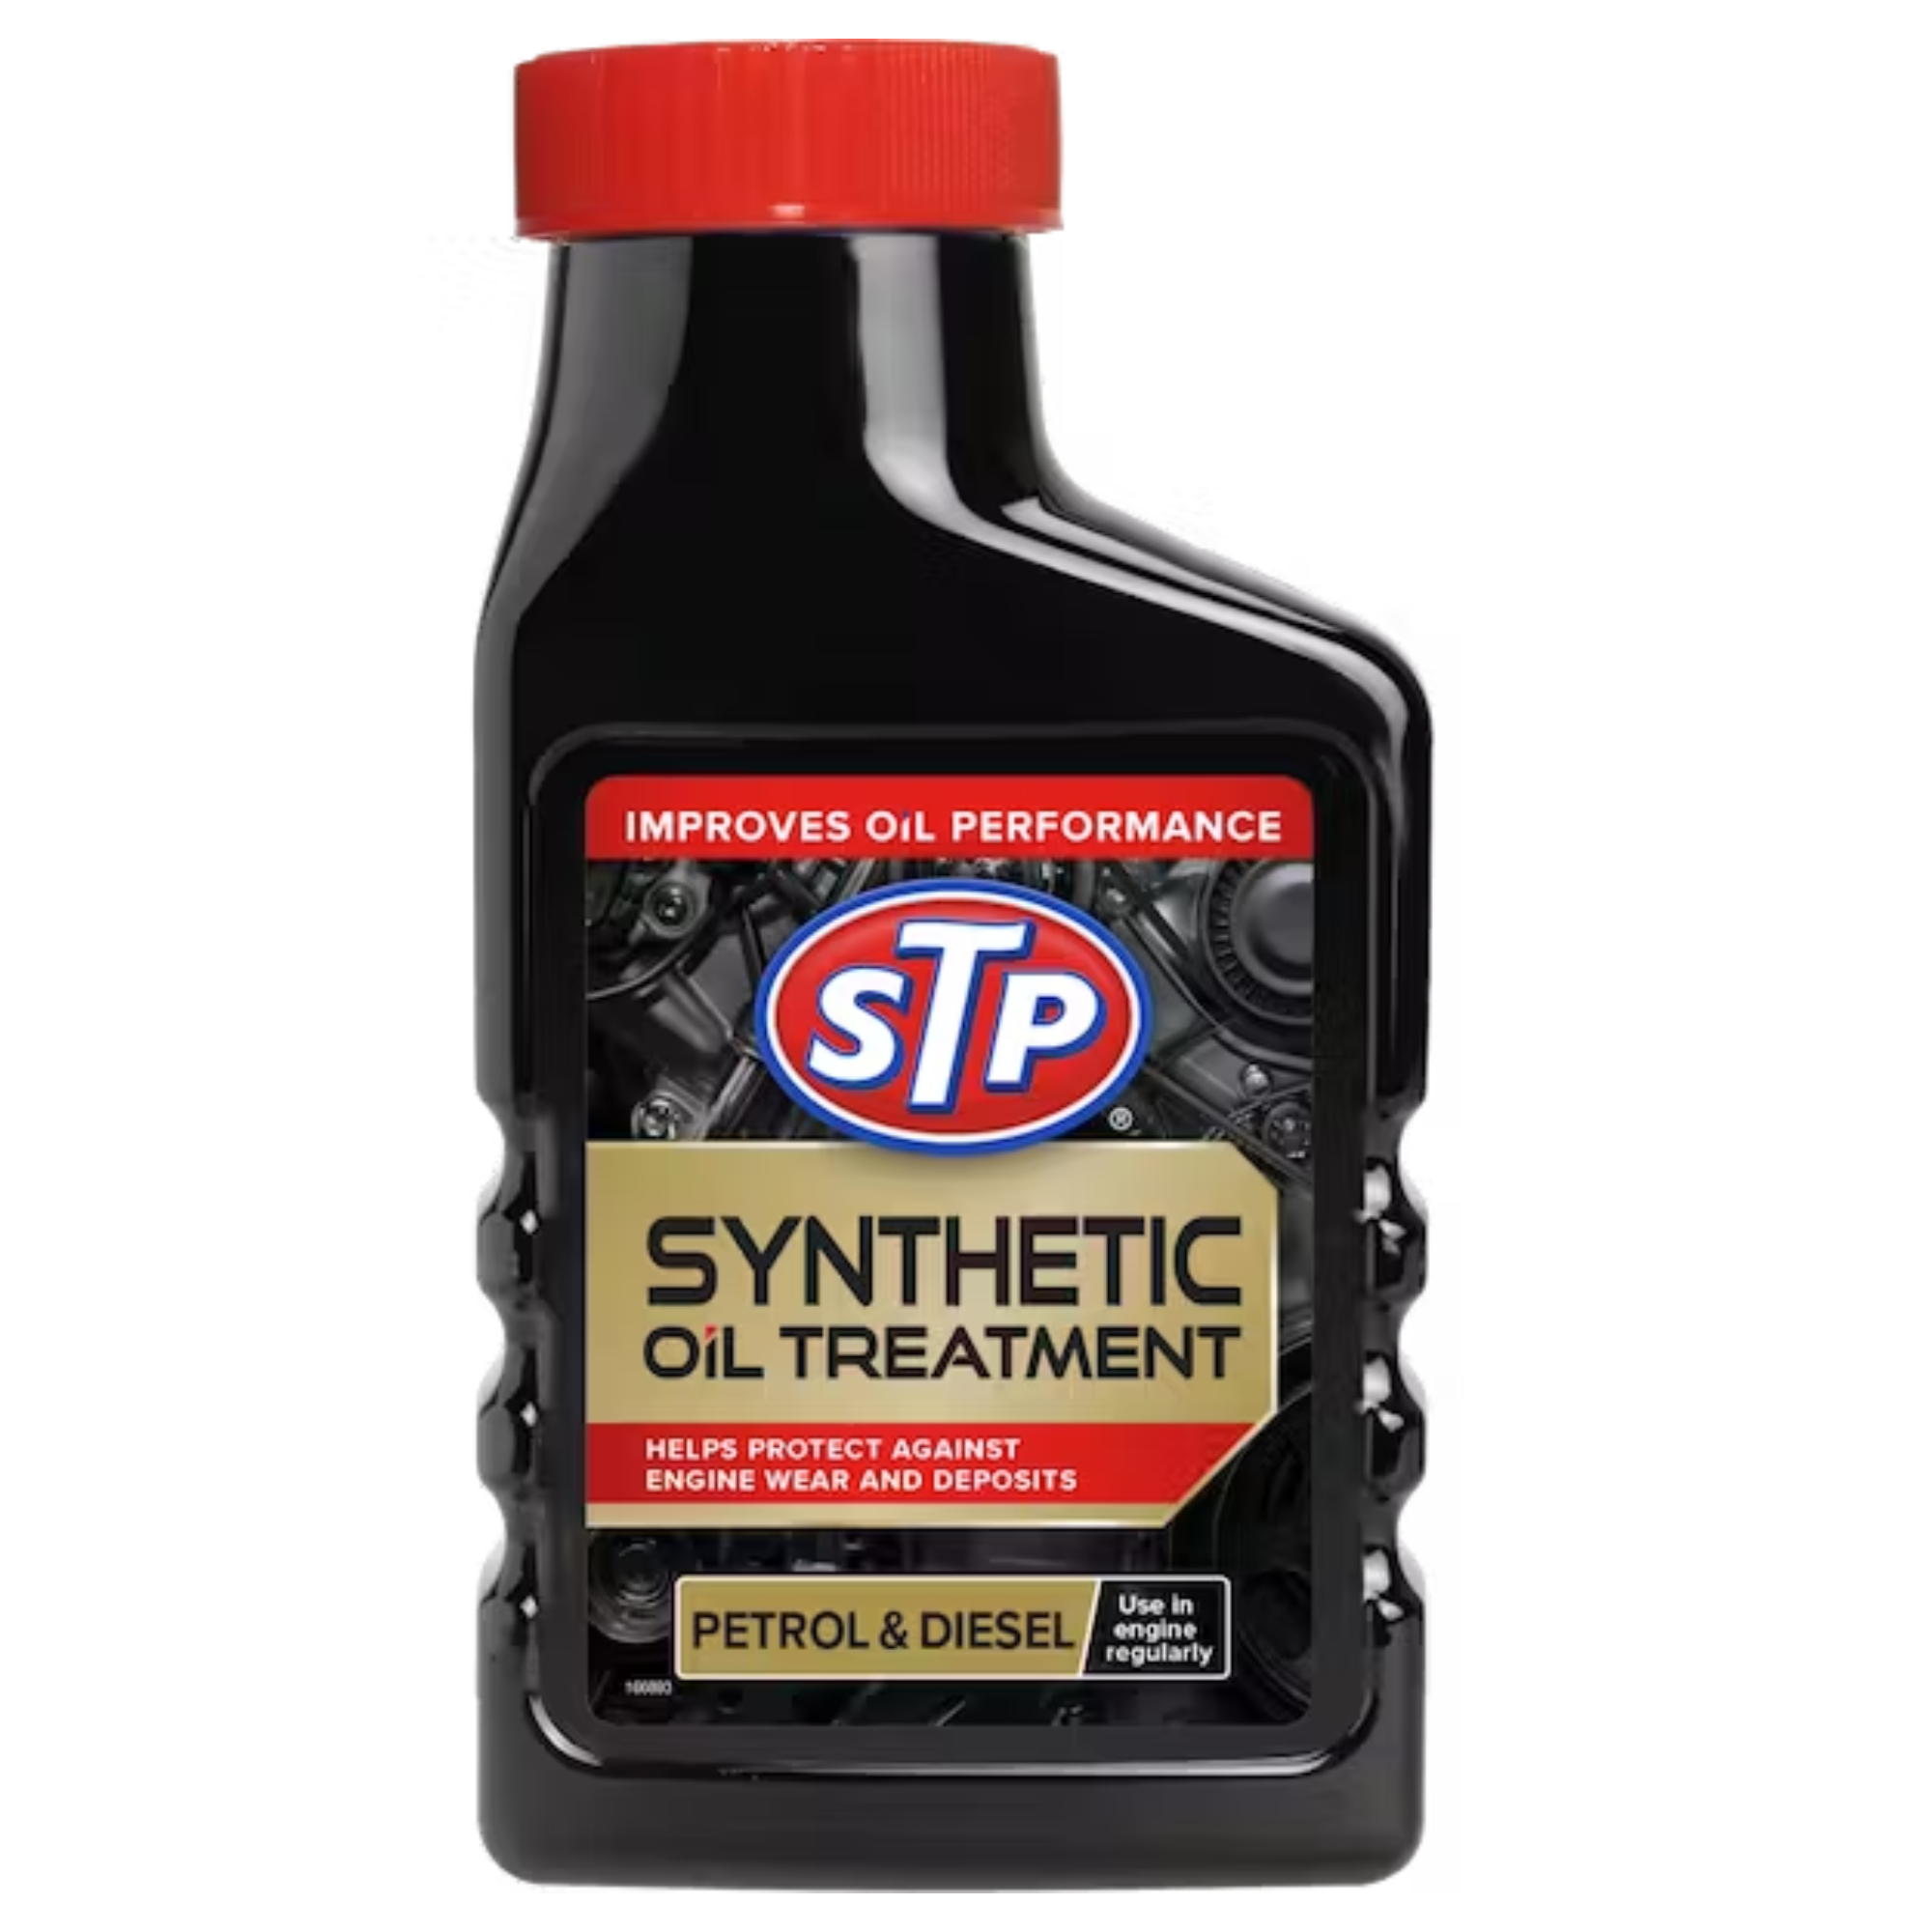 STP 300ml Synthetic Oil Treatment